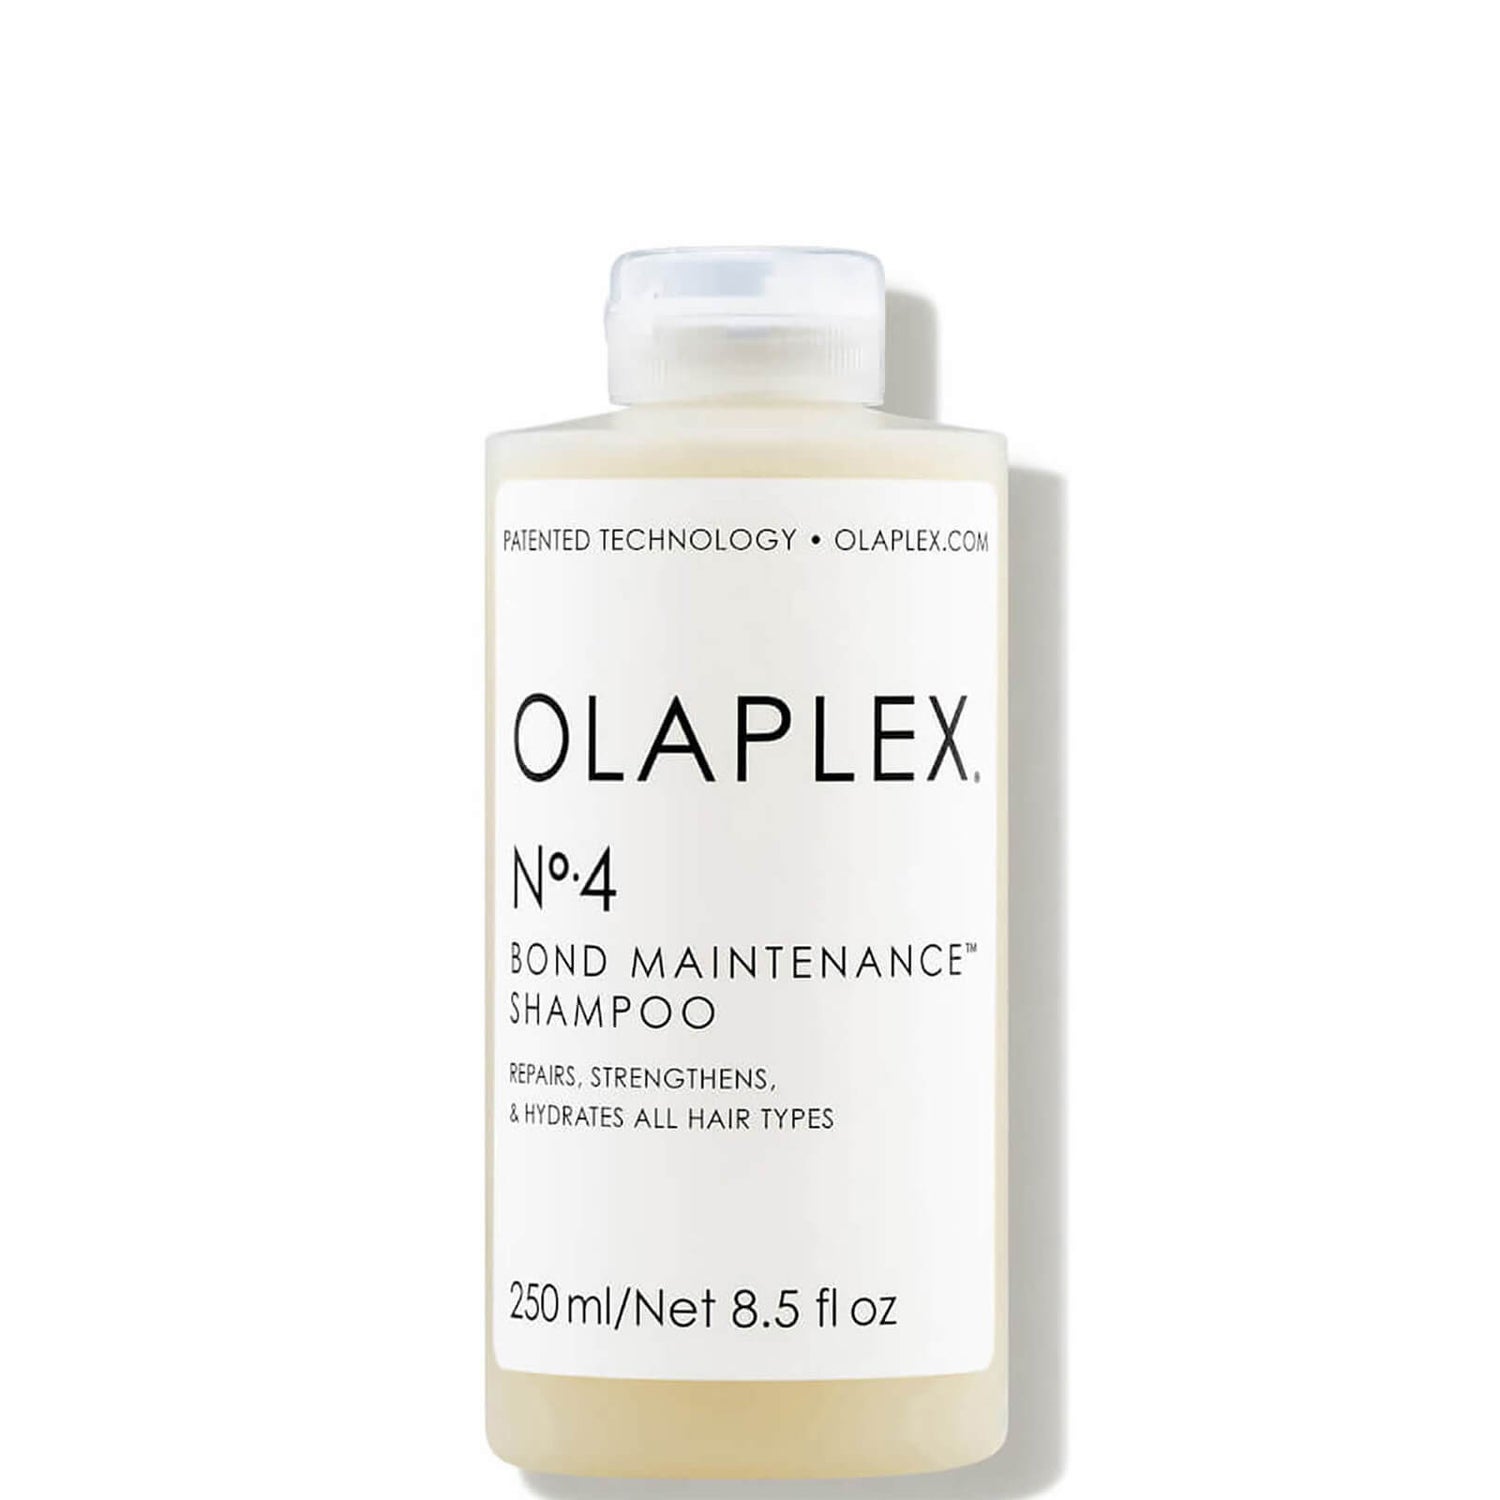 Olaplex no 4 bond maintenance shampoo karen elaina price